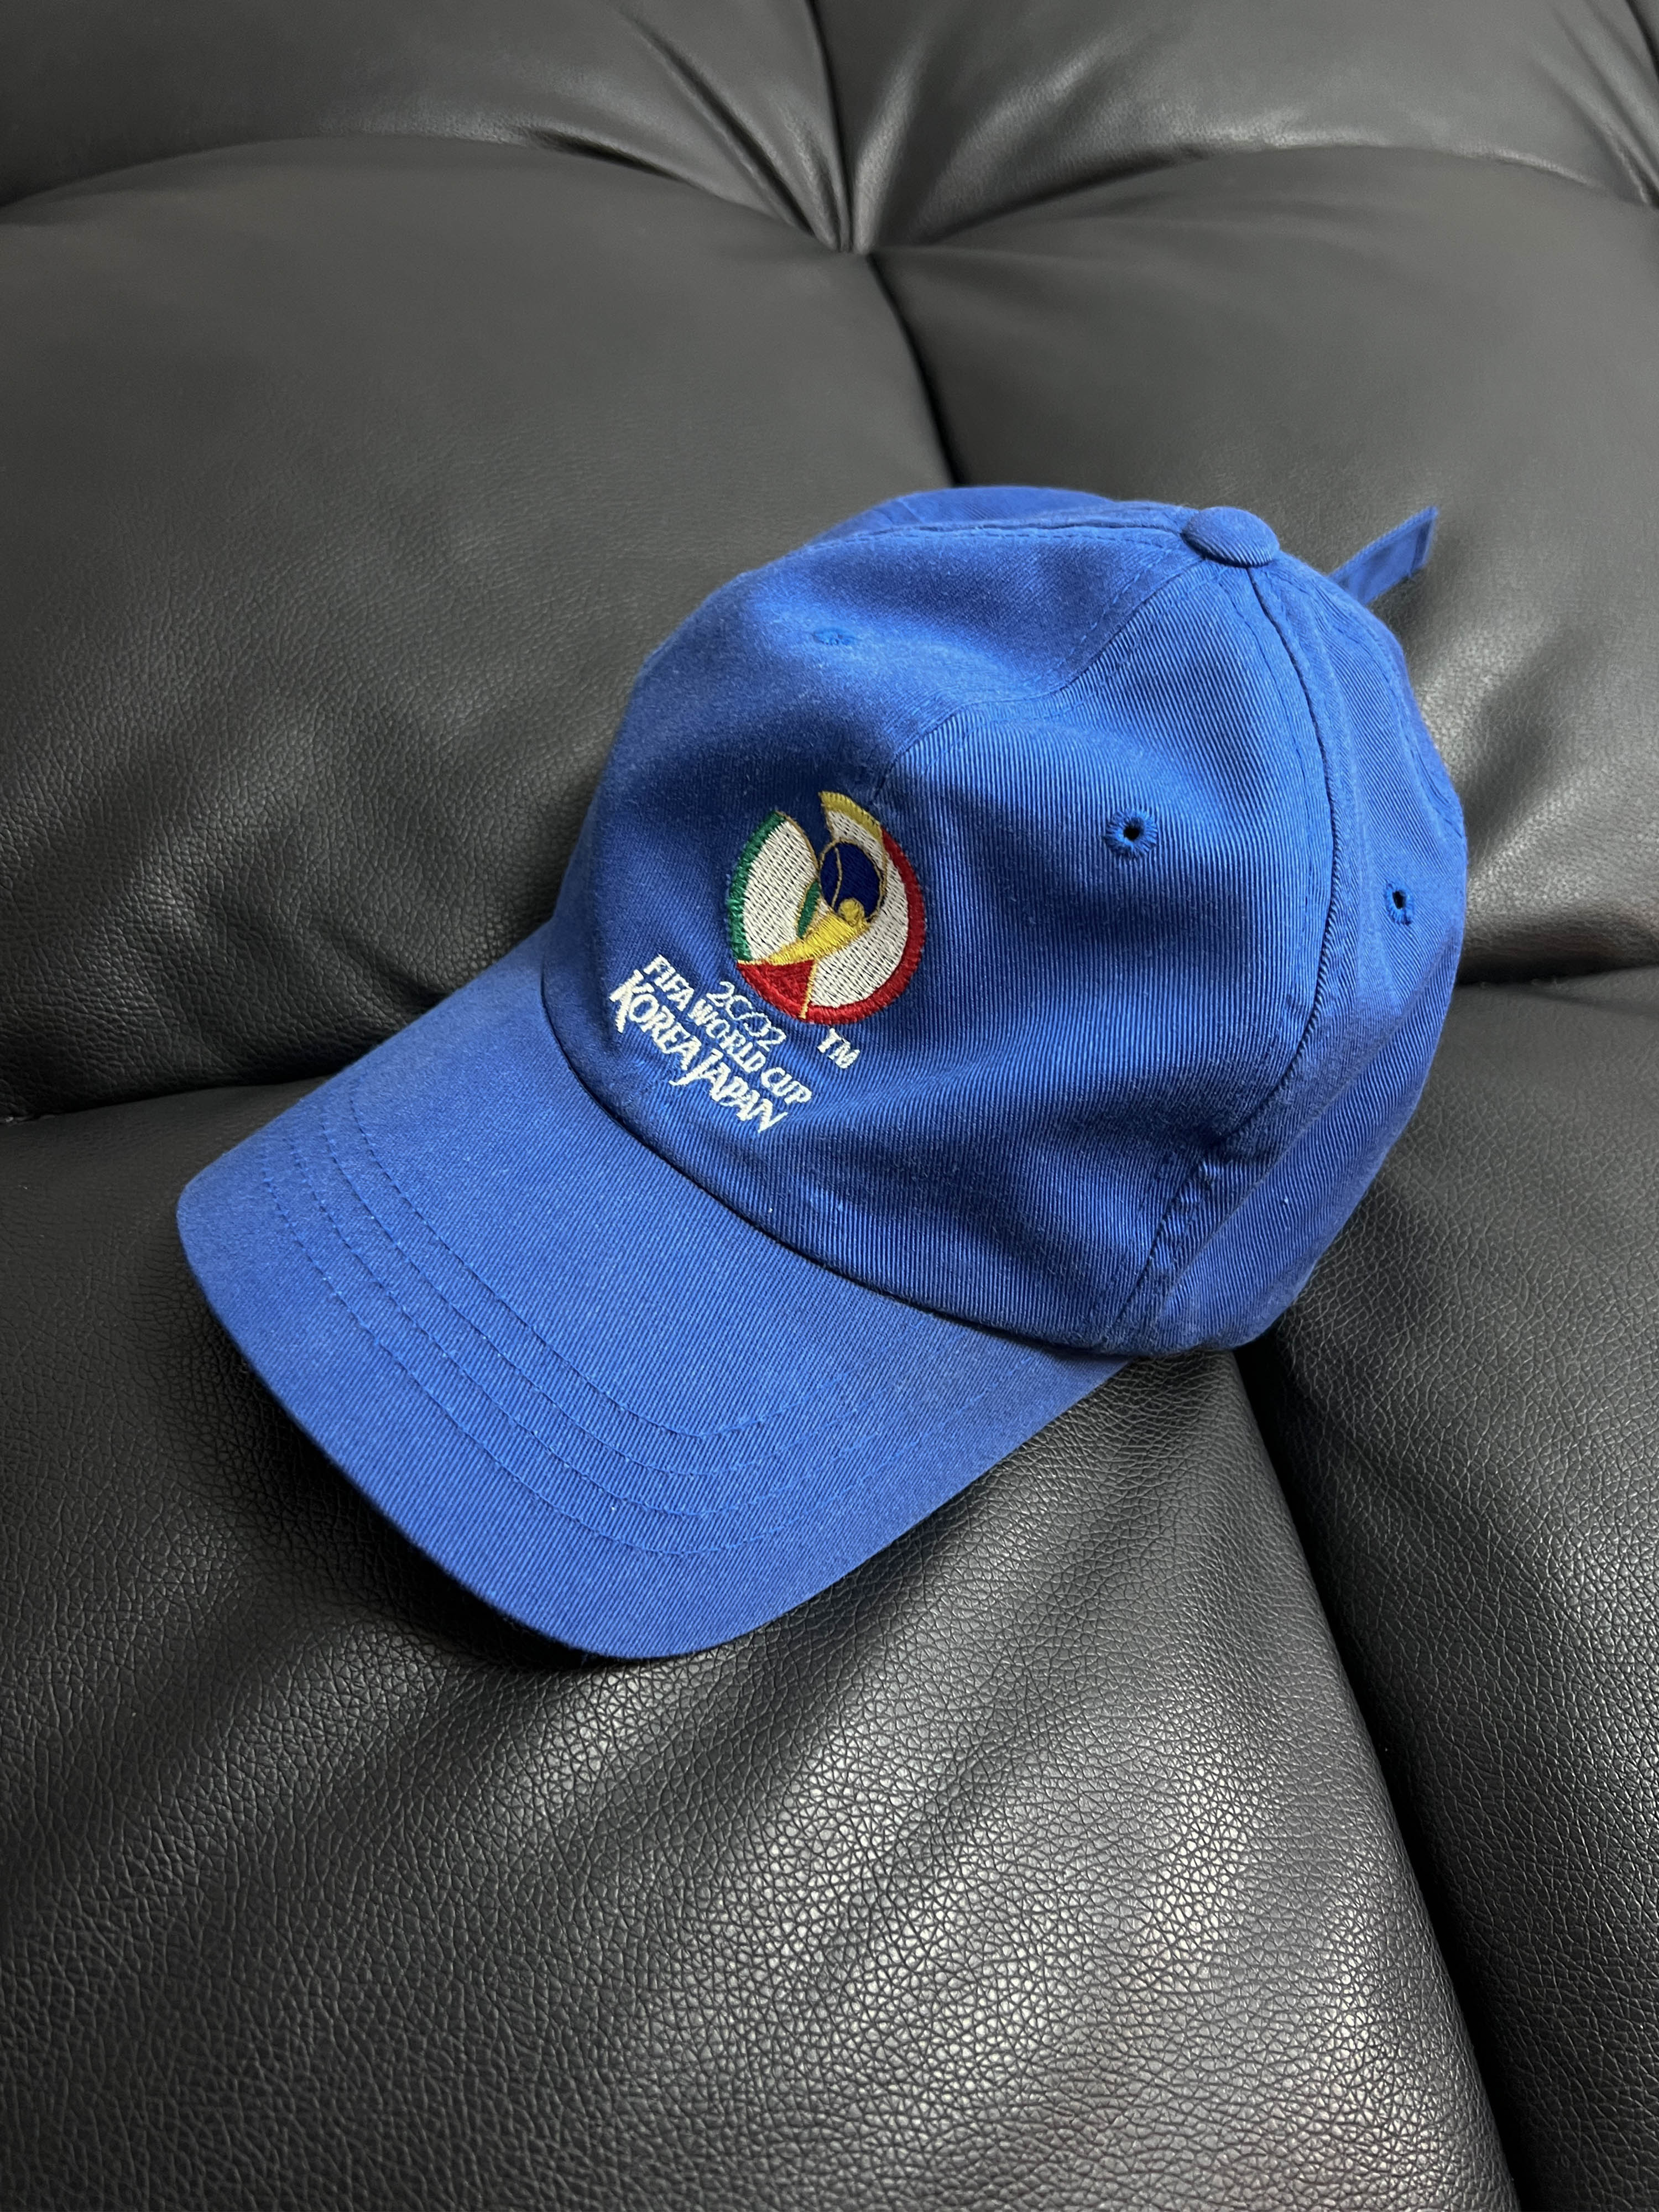 2002 FIFA World cup merchandise by HYUNDAI